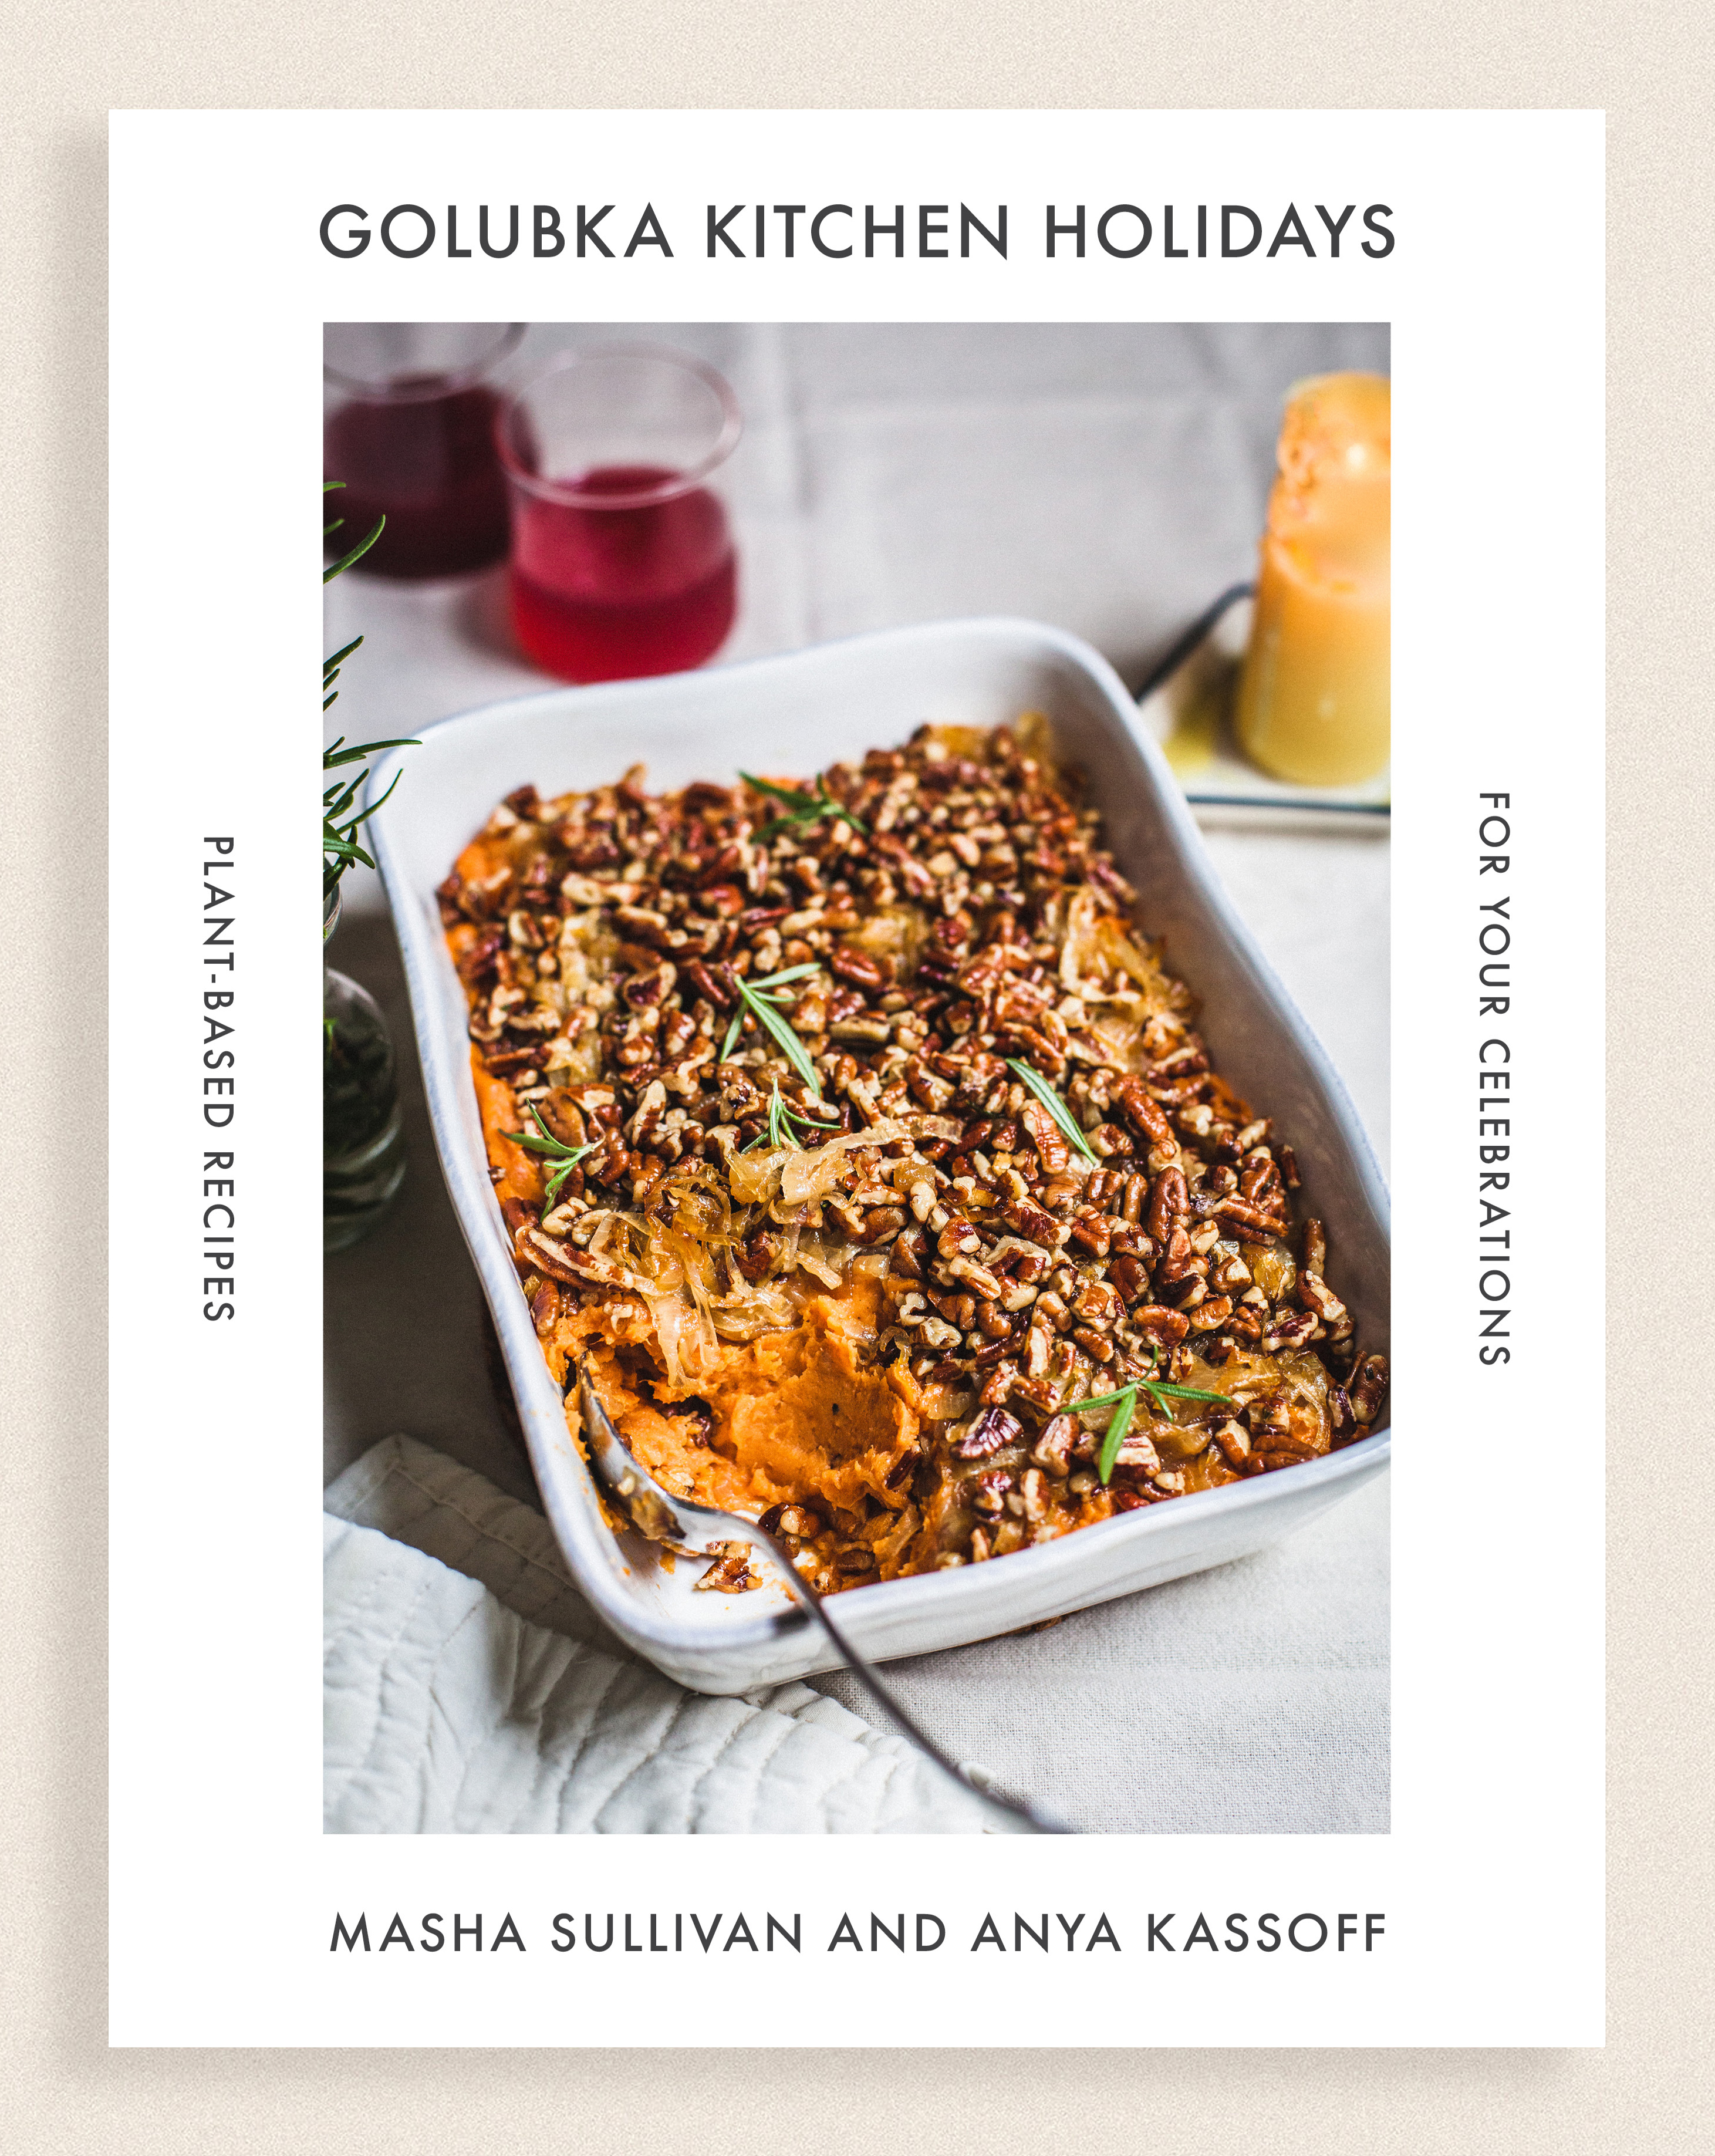 Golubka Kitchen Holidays, Our New Ebook